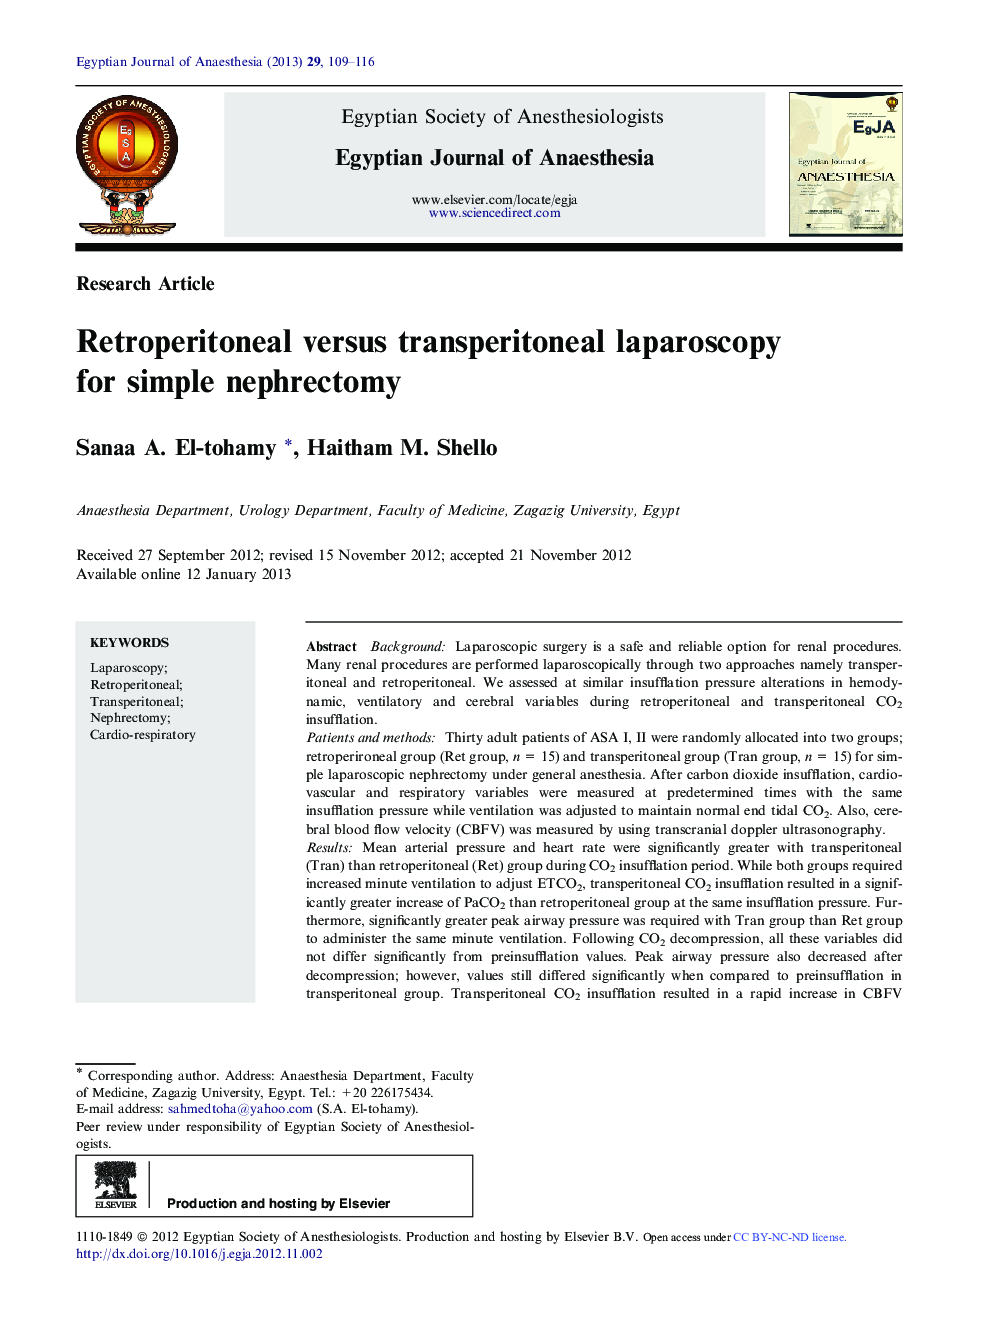 Retroperitoneal versus transperitoneal laparoscopy for simple nephrectomy 